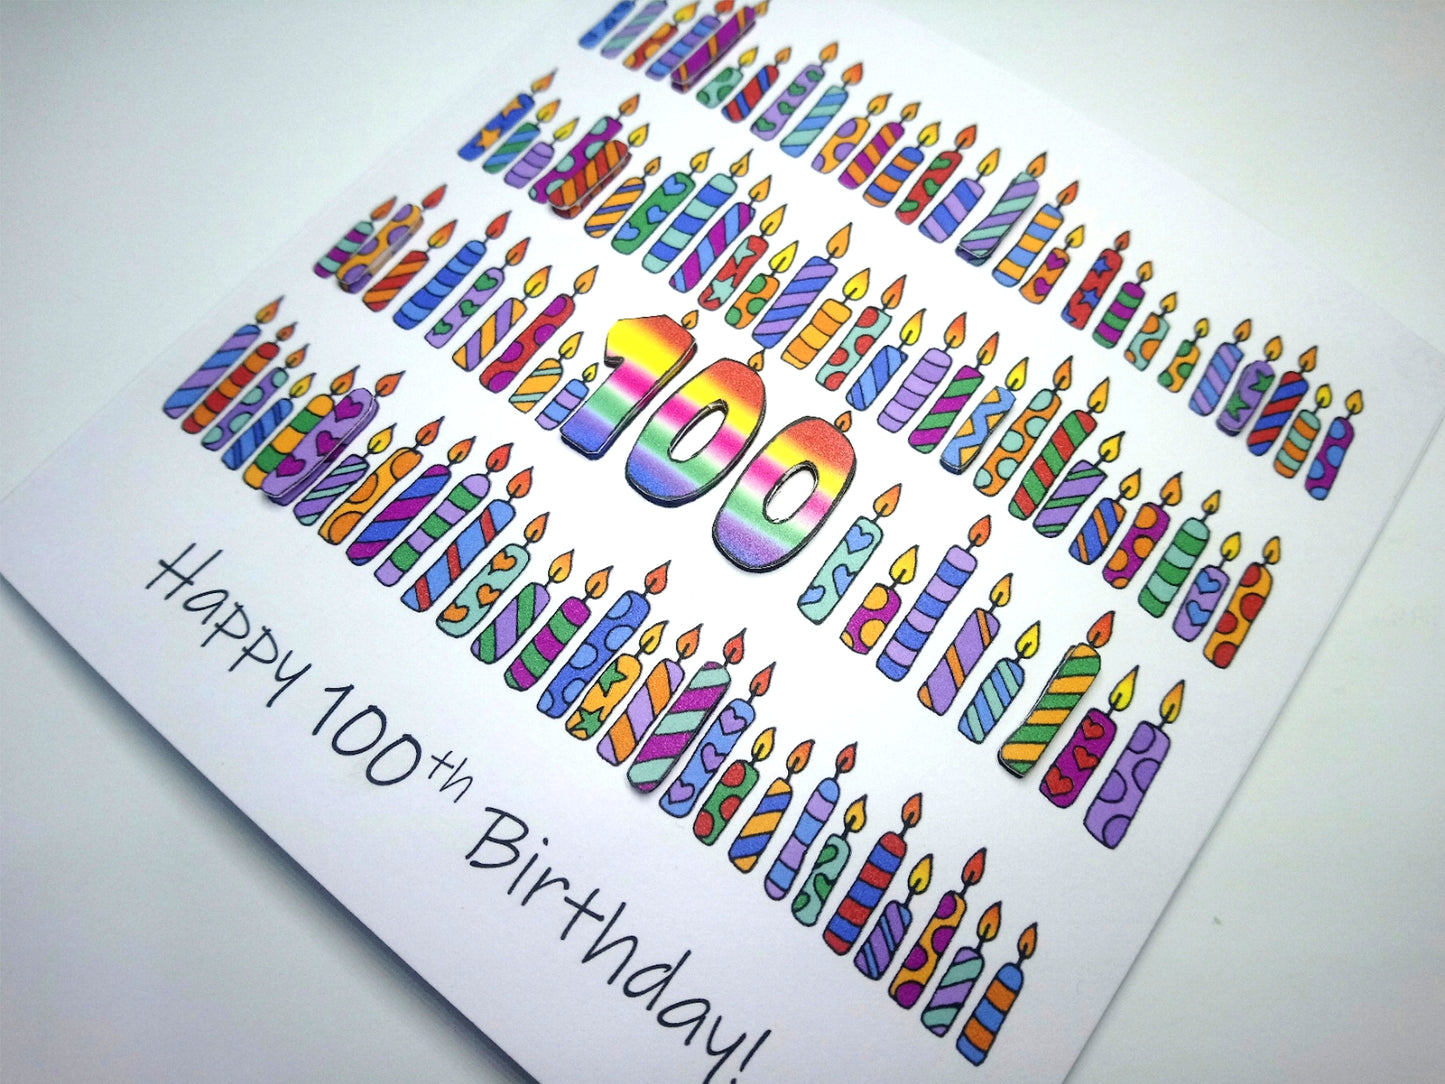 100 Candles Birthday Card 100th